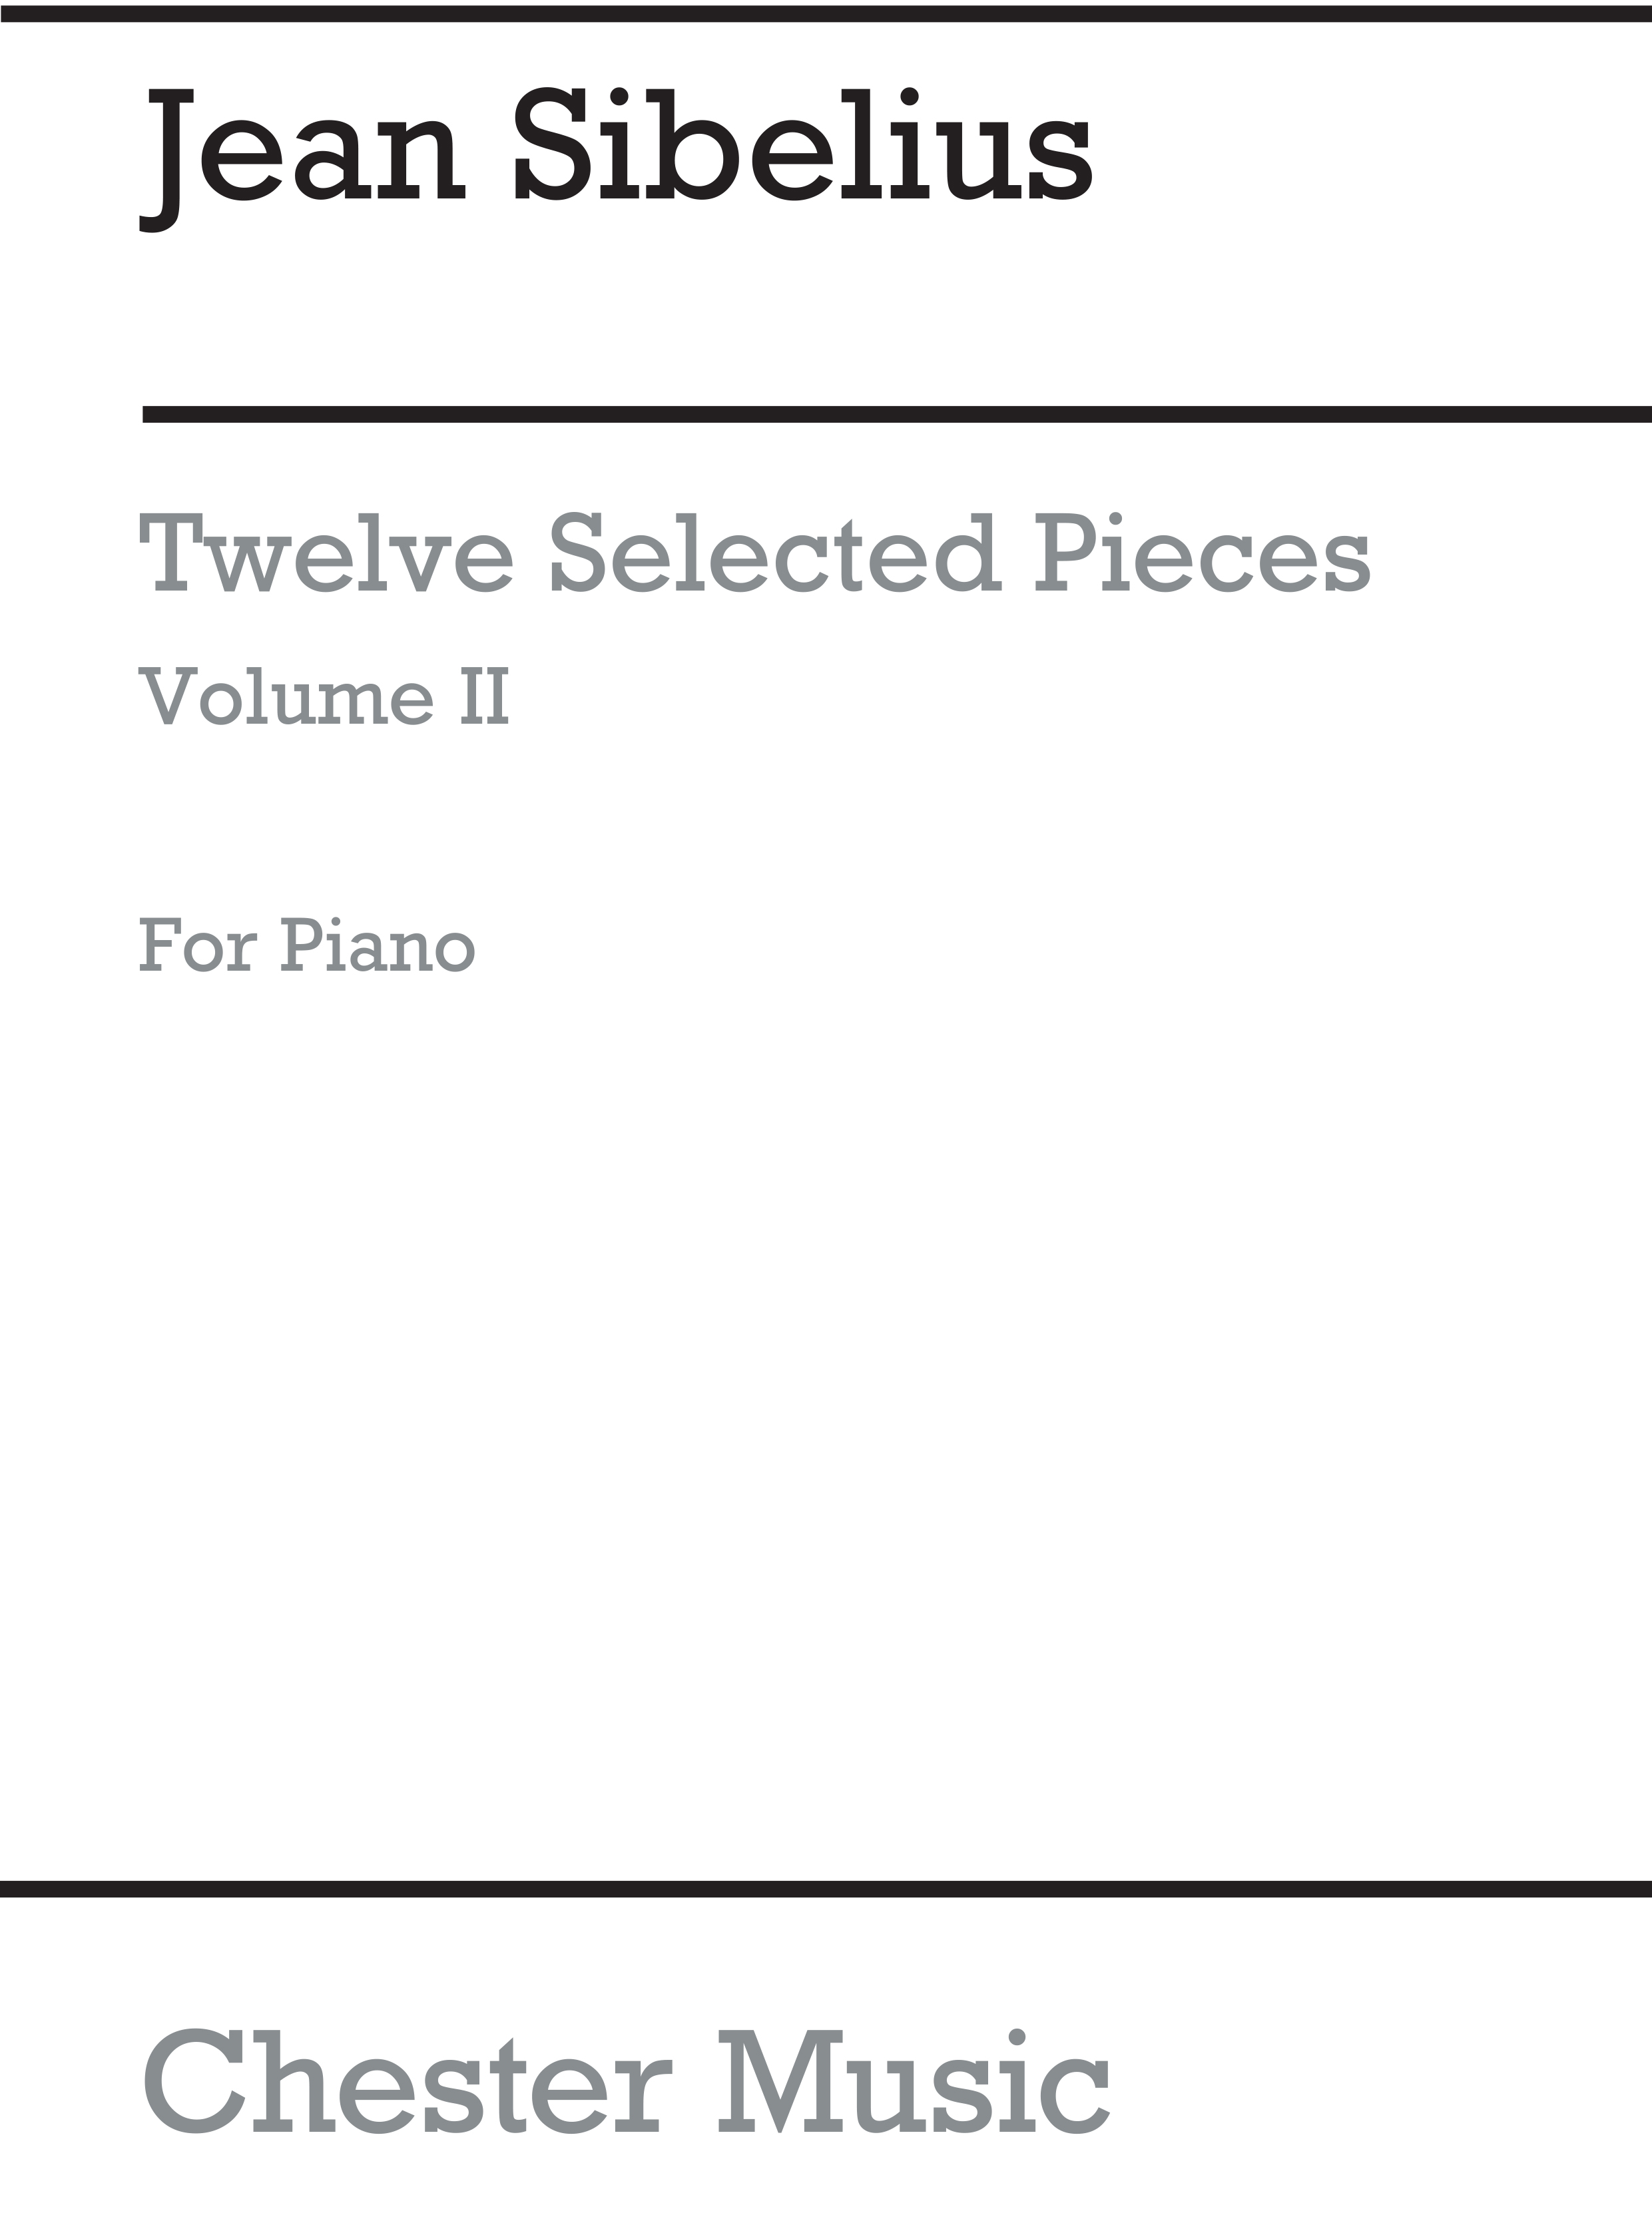 Jean Sibelius: Twelve Selected Pieces For Piano Vol.2: Piano: Instrumental Album